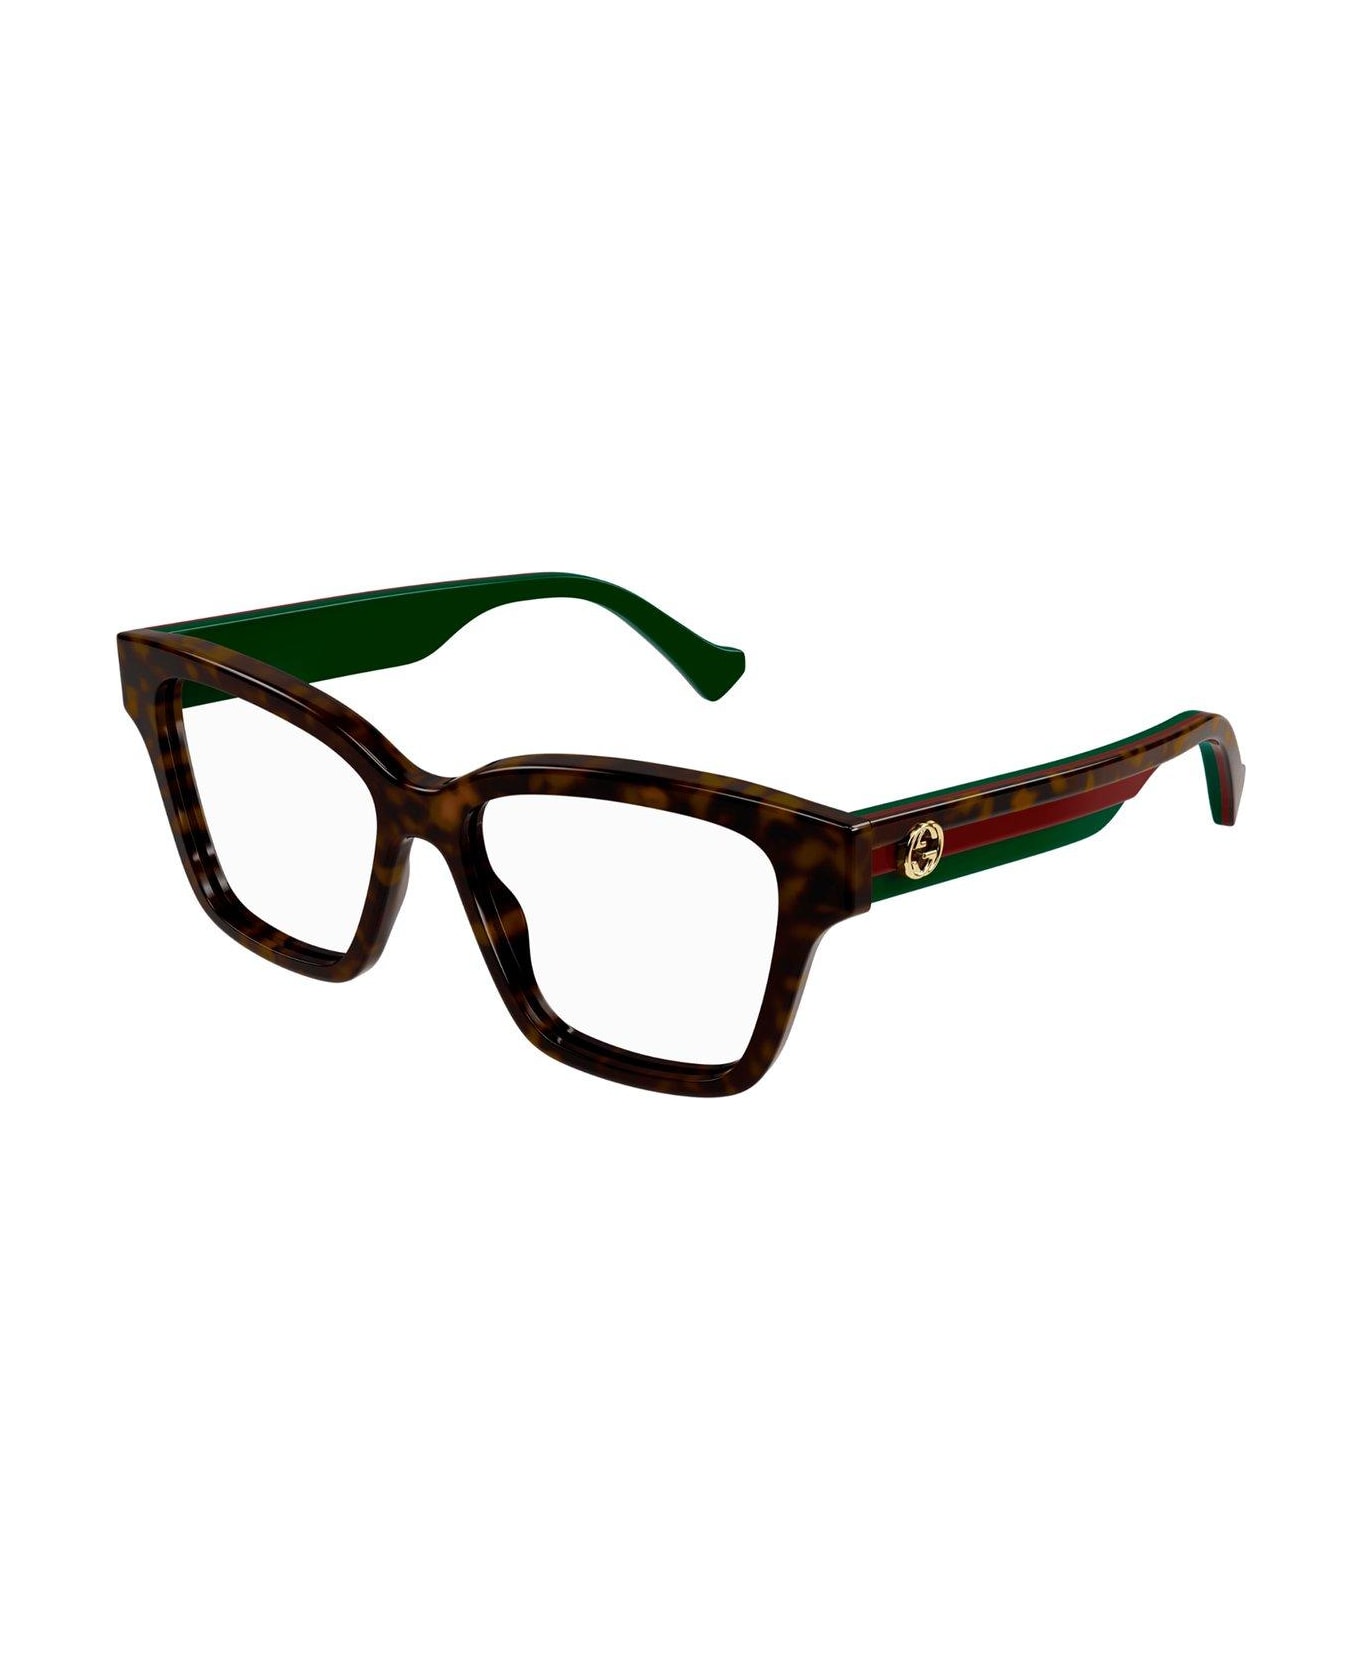 Gucci Eyewear Rectangle Frame Glasses - 006 havana havana transpa アイウェア